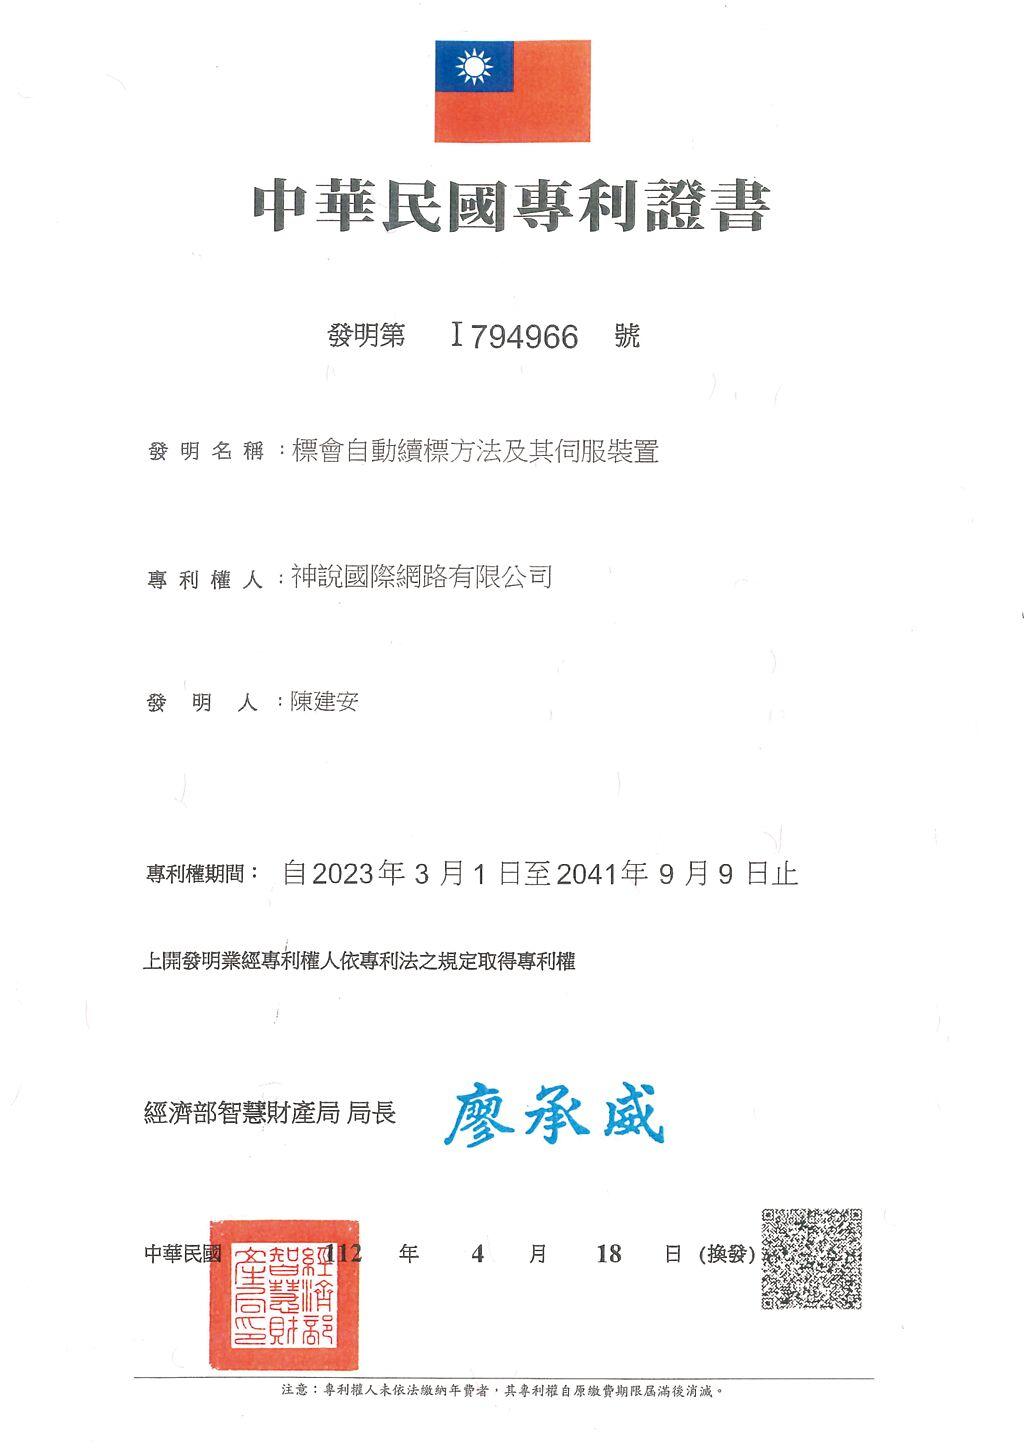 CCE中華資金交易所P2P標會平台榮獲中華民國專利證書。圖／CCE中華資金交易所提供